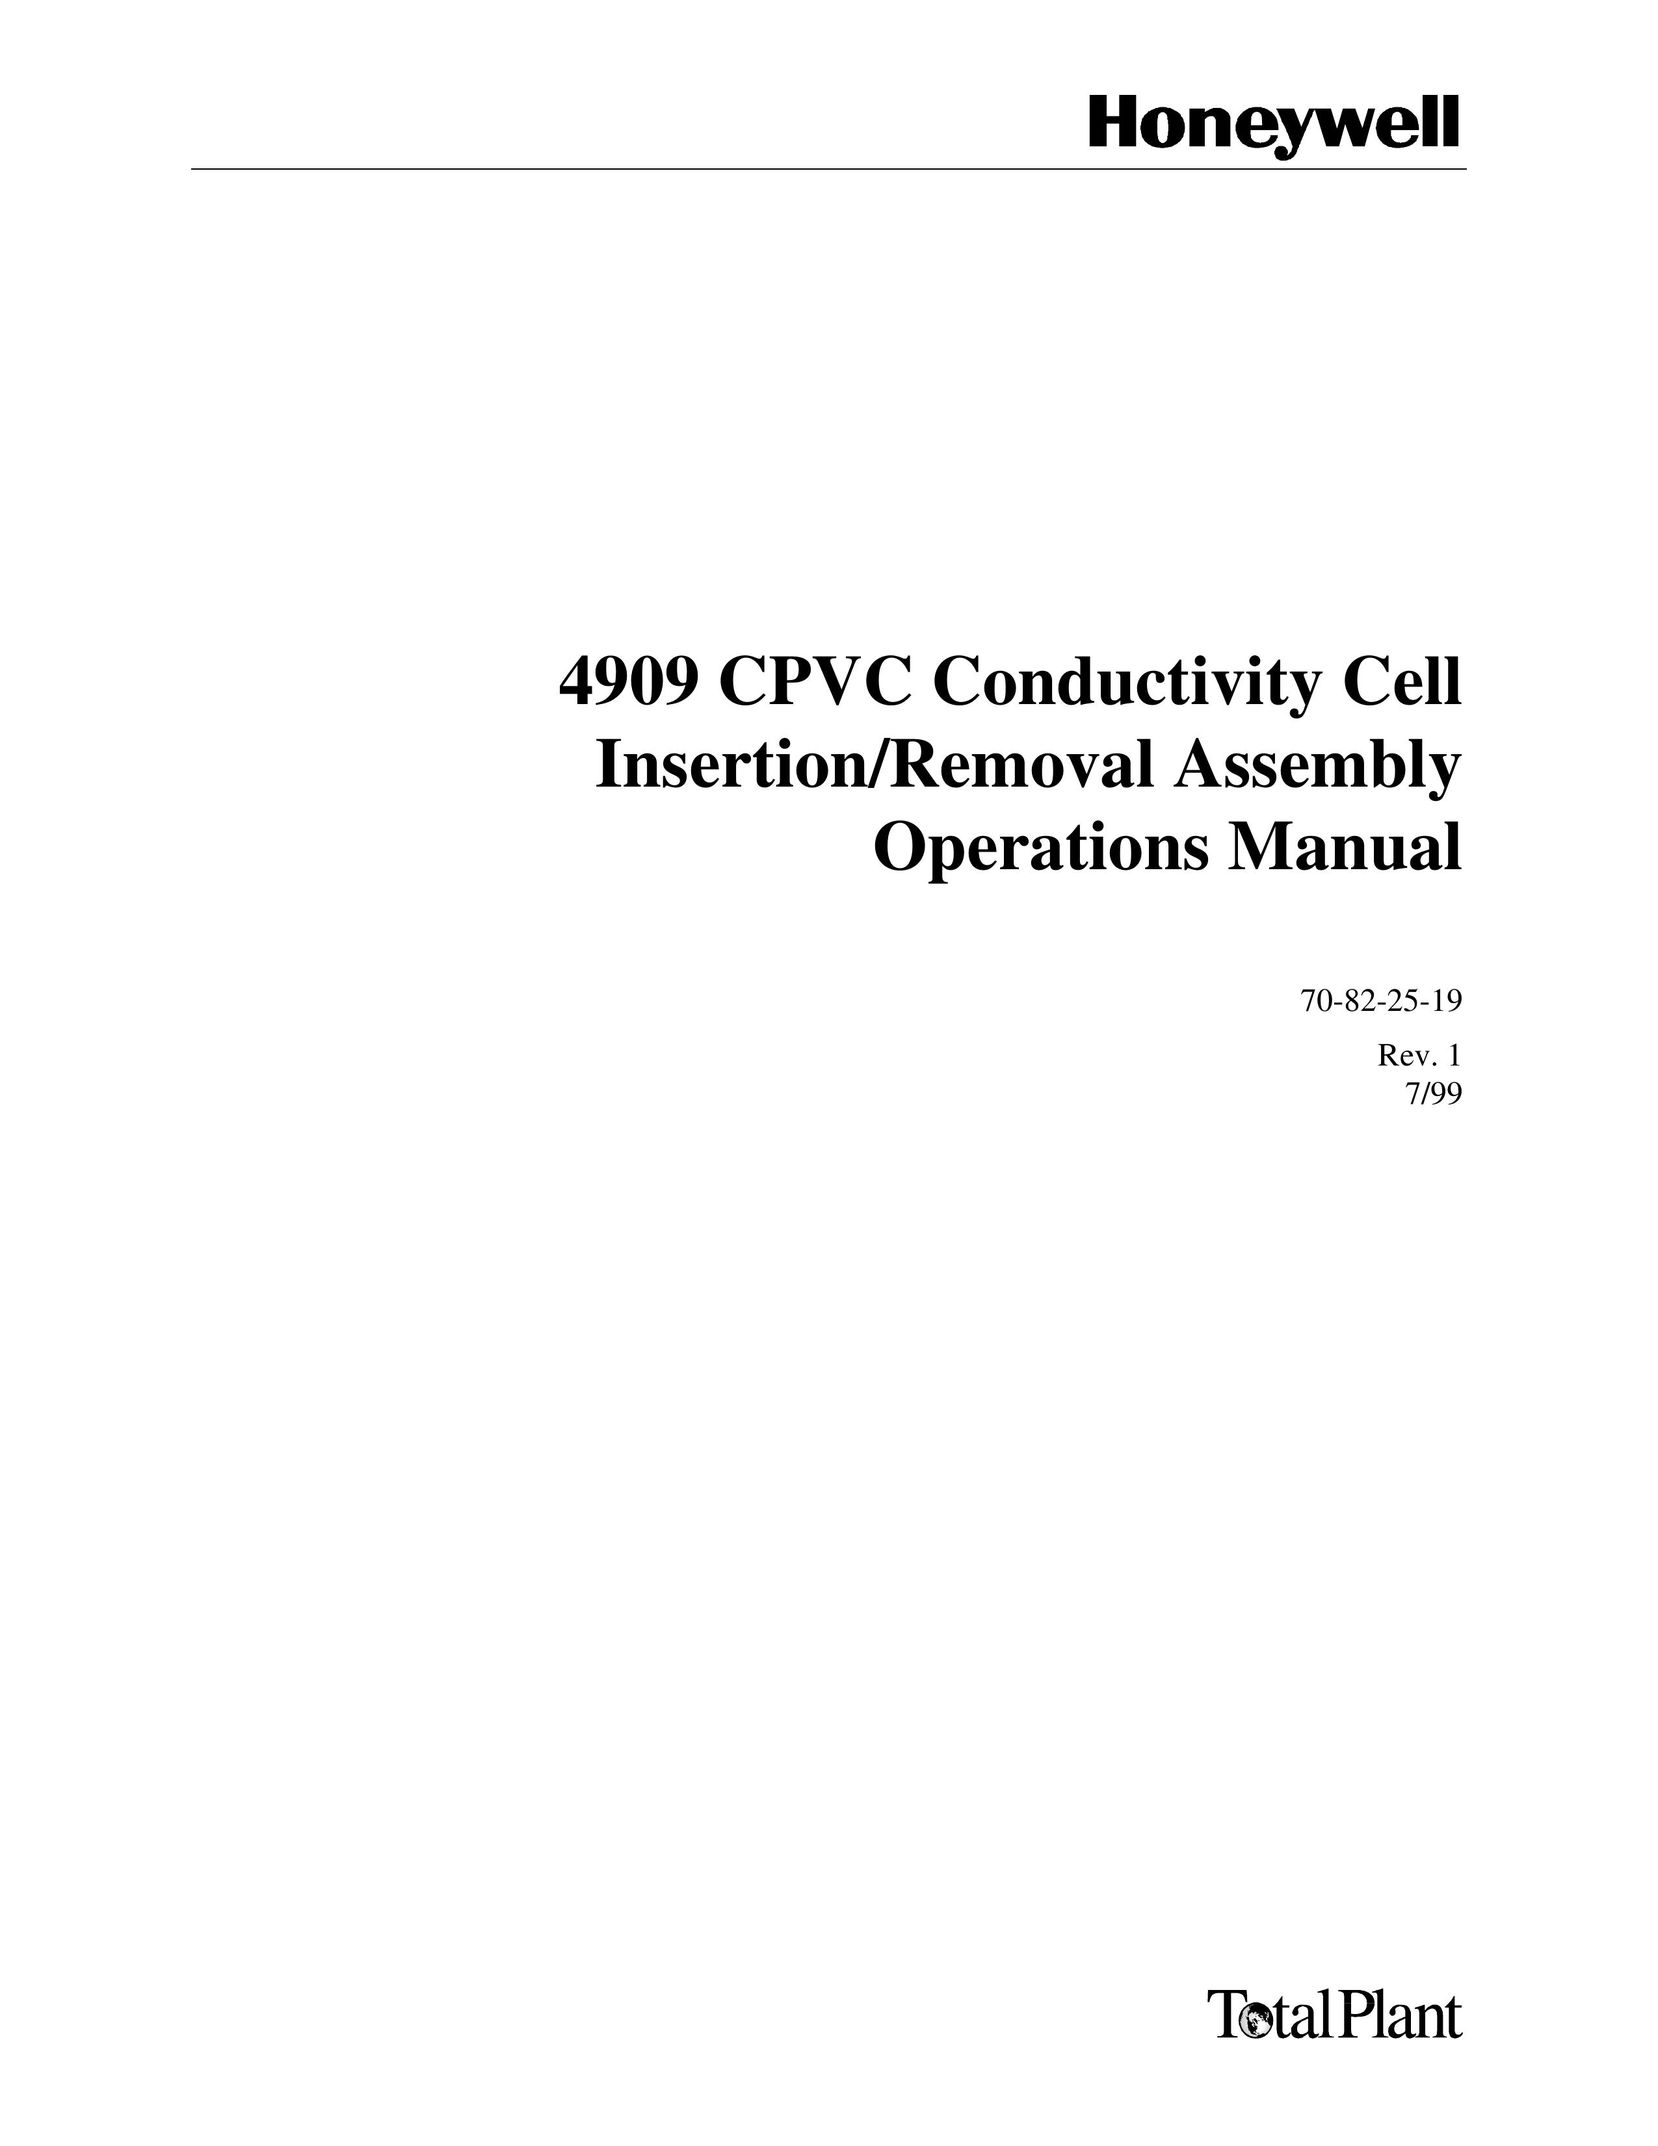 Honeywell 4909 CPVC Cell Phone User Manual